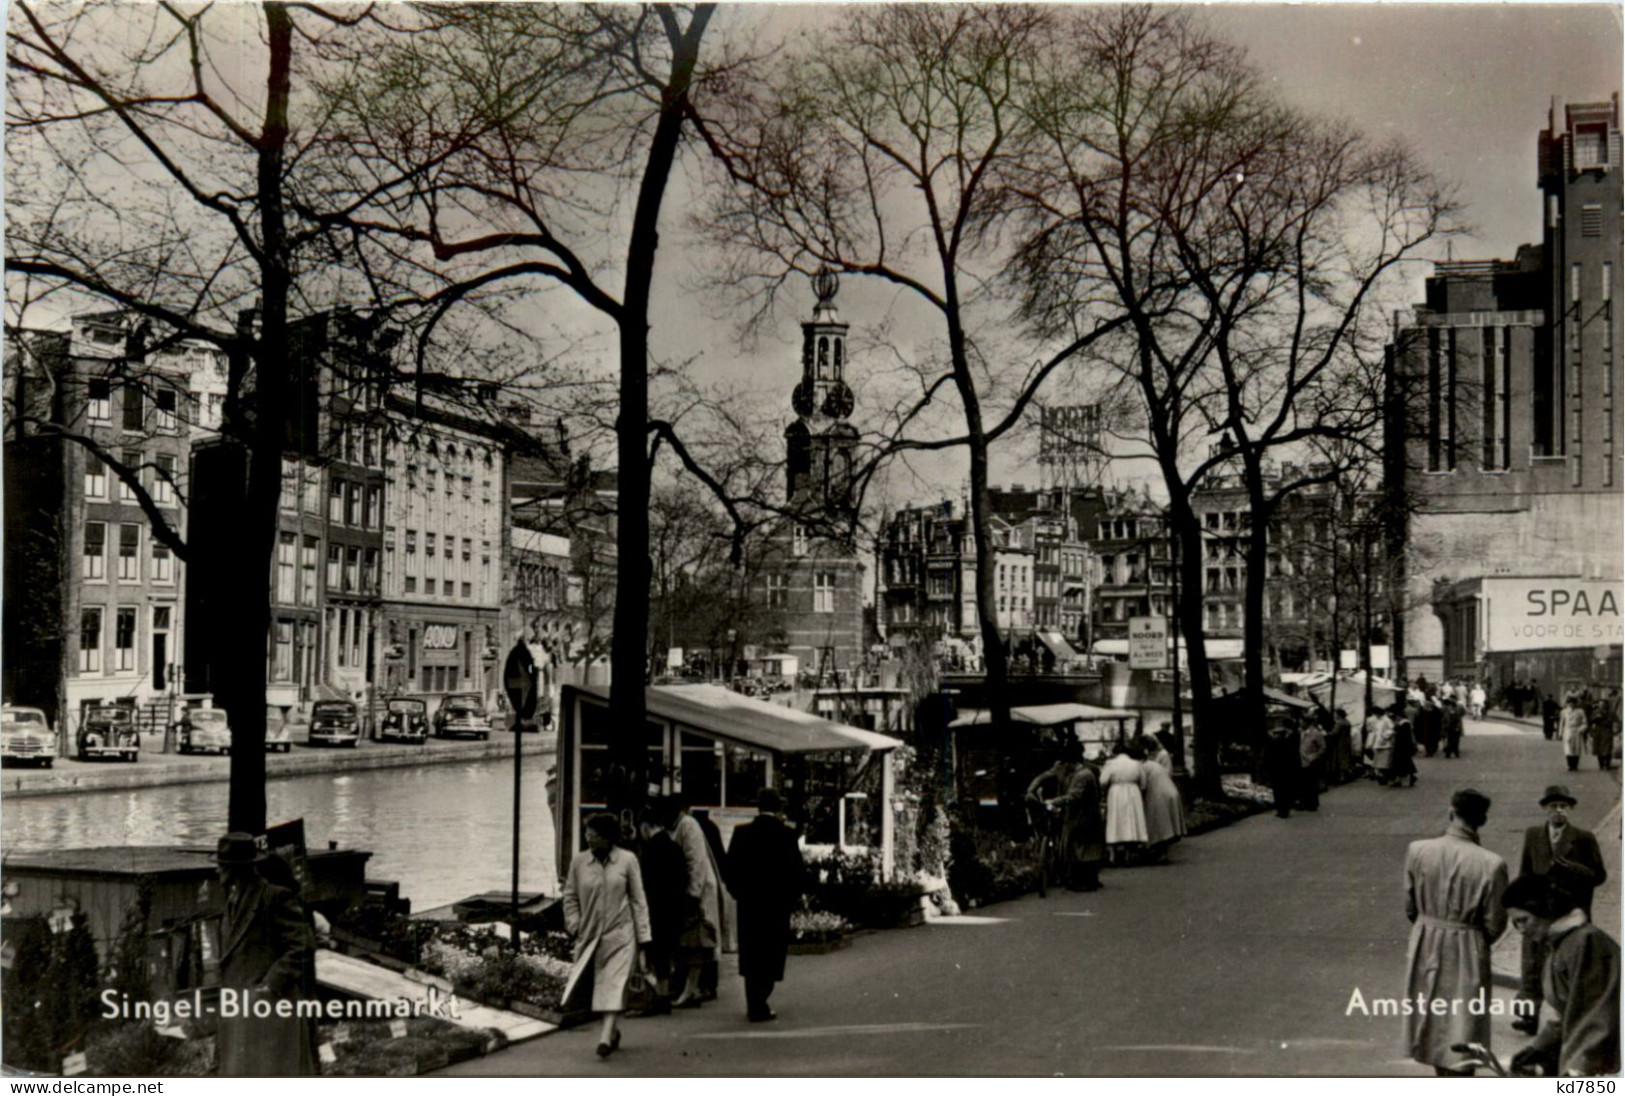 Amsterdam - Singel-Bloemenmarkt - Amsterdam